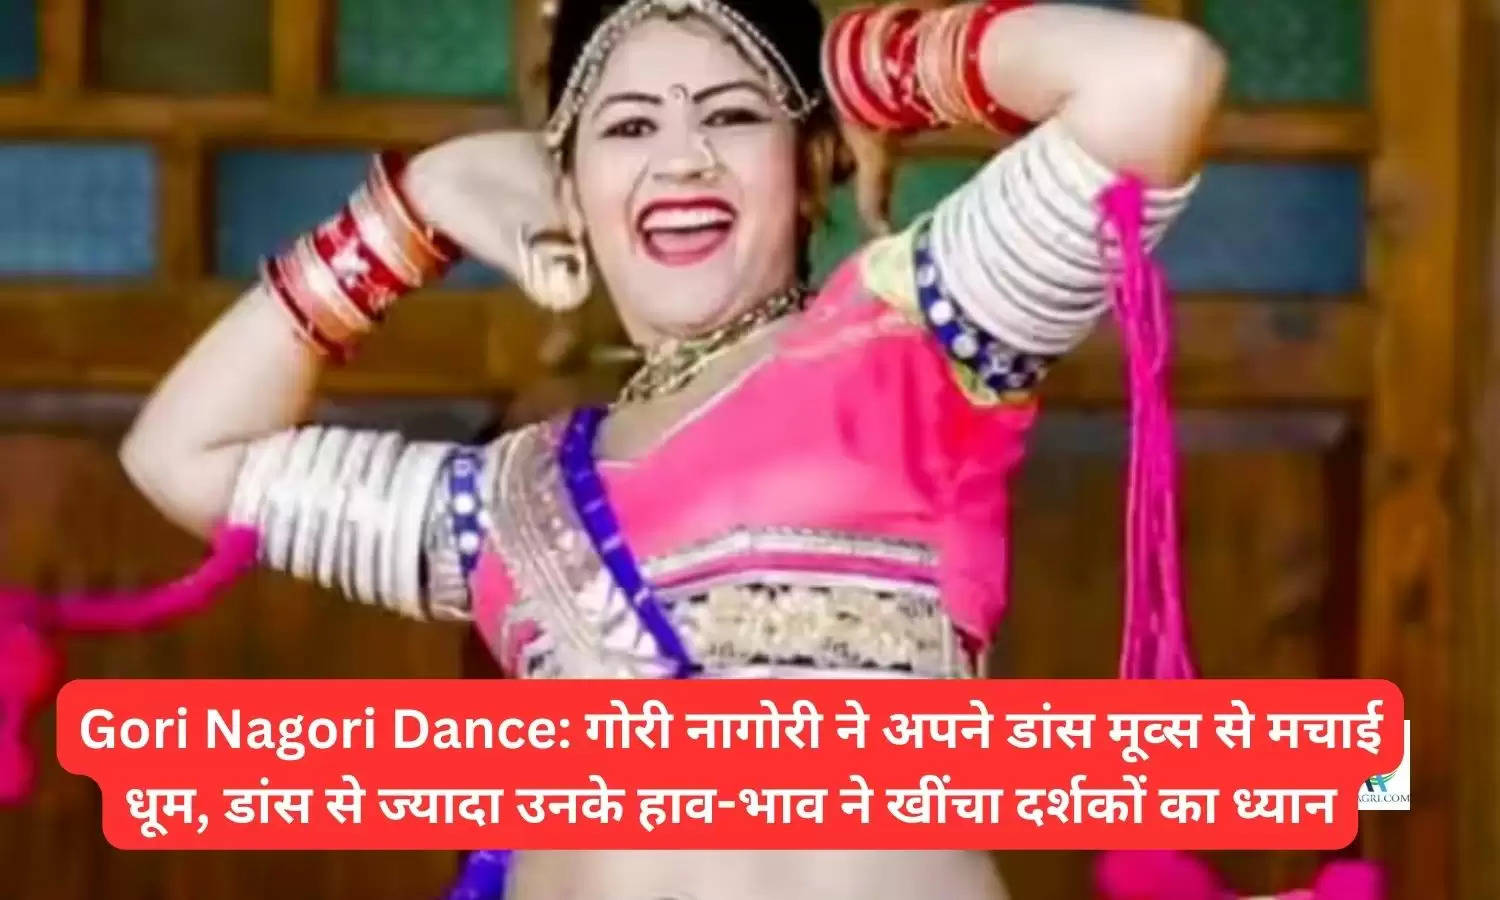 Gori Nagori Dance: गोरी नागोरी ने अपने डांस मूव्स से मचाई धूम, डांस से ज्यादा उनके हाव-भाव ने खींचा दर्शकों का ध्यान